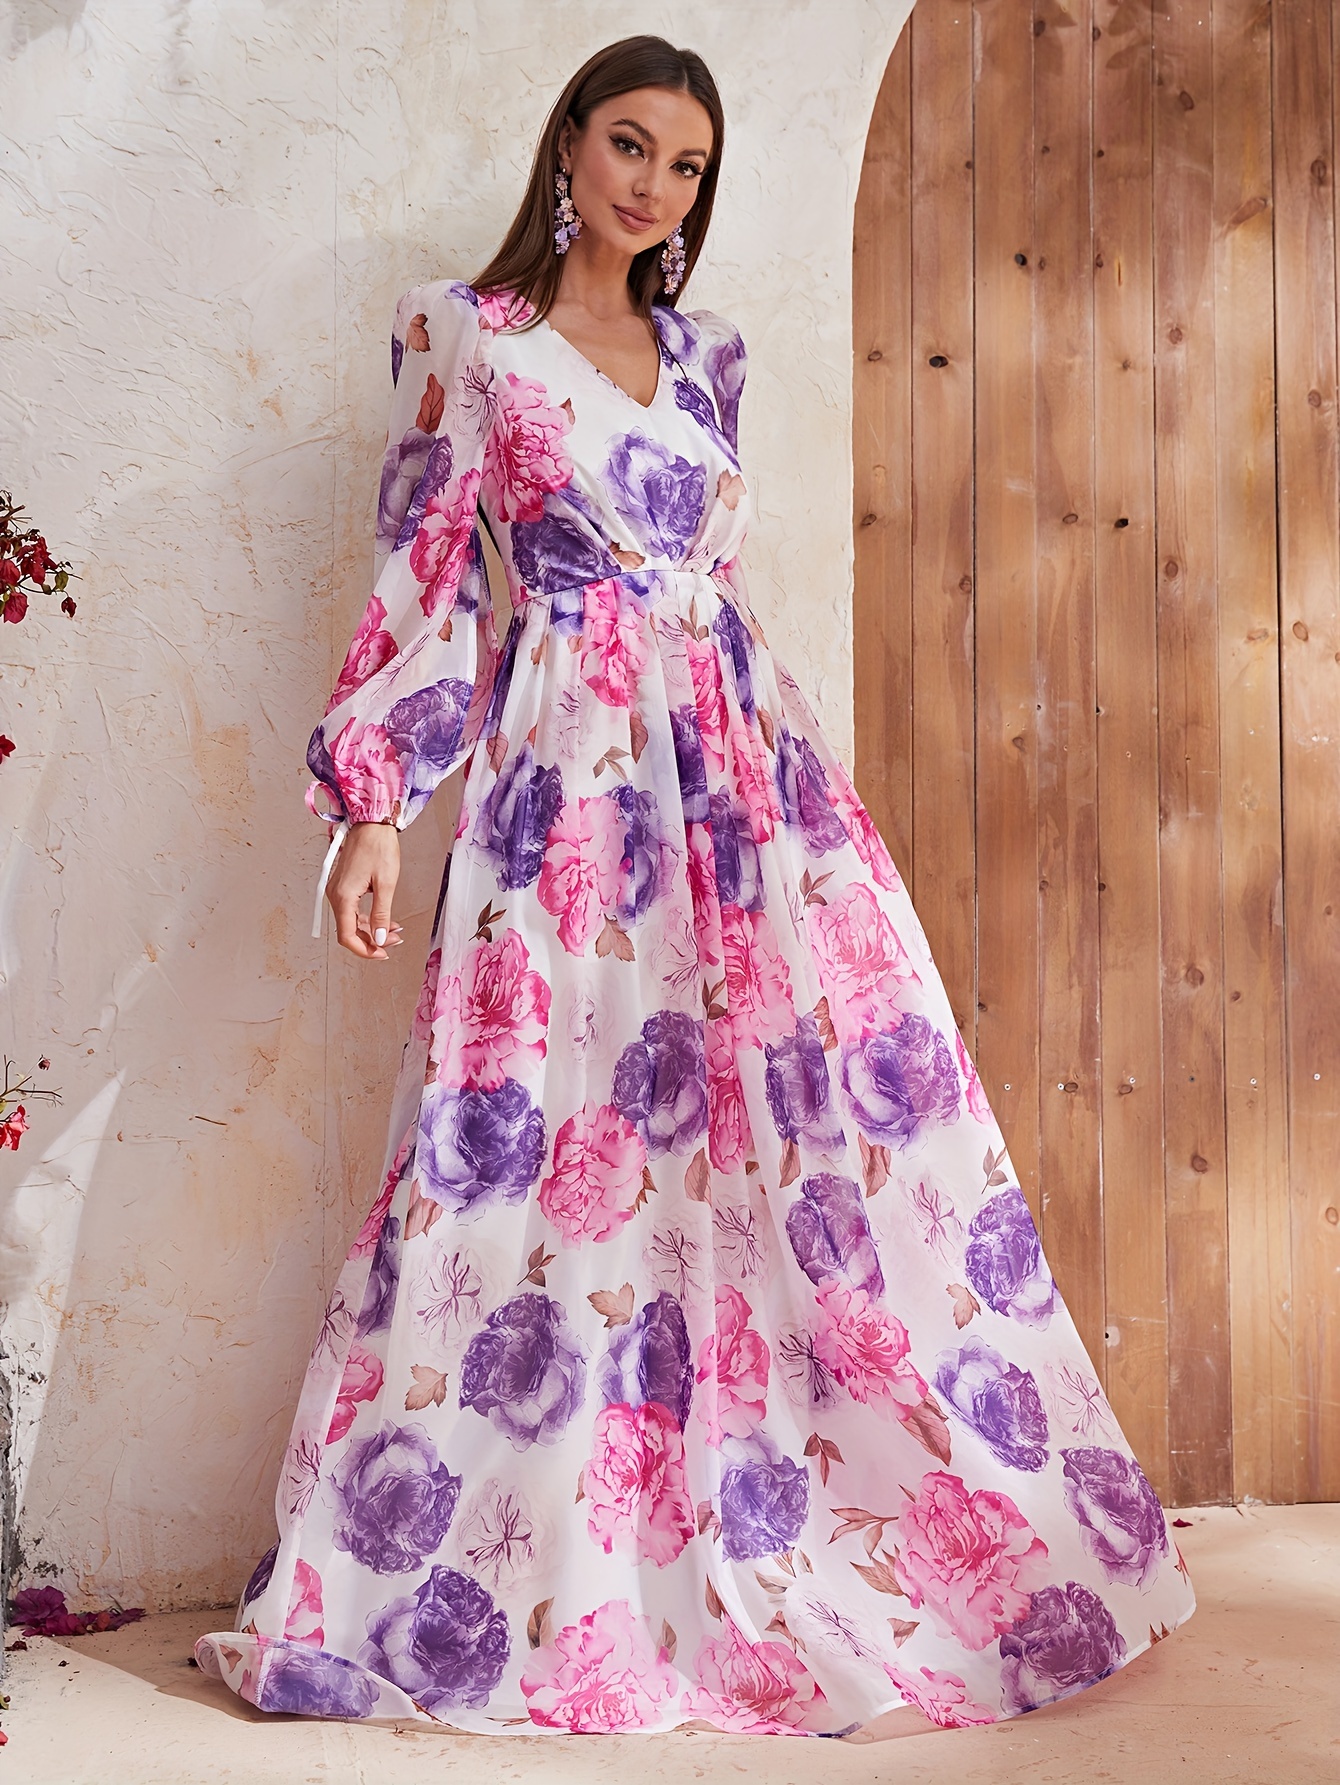 Leopard Floral Flowy Swing Dress, Long Sleeve V Neck Fashion Spring Summer  Dresses, Women's Clothing